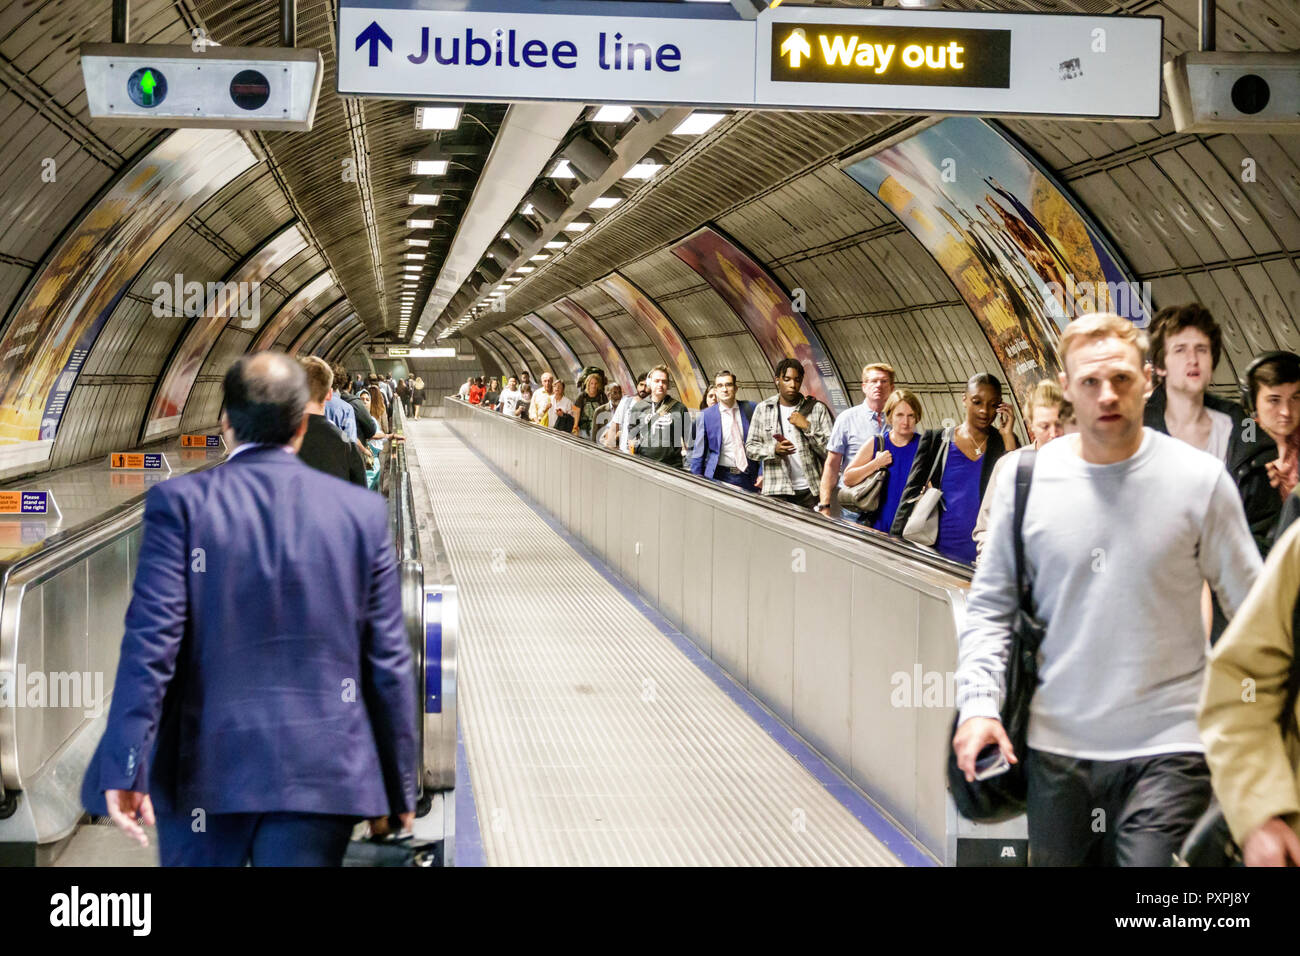 Londra Inghilterra,UK,Lambeth South Bank,Waterloo Station,metropolitana metropolitana metropolitana metro,travellator,marciapiede mobile,Jubilee line,uomo uomo maschio,donna femmina donne Foto Stock